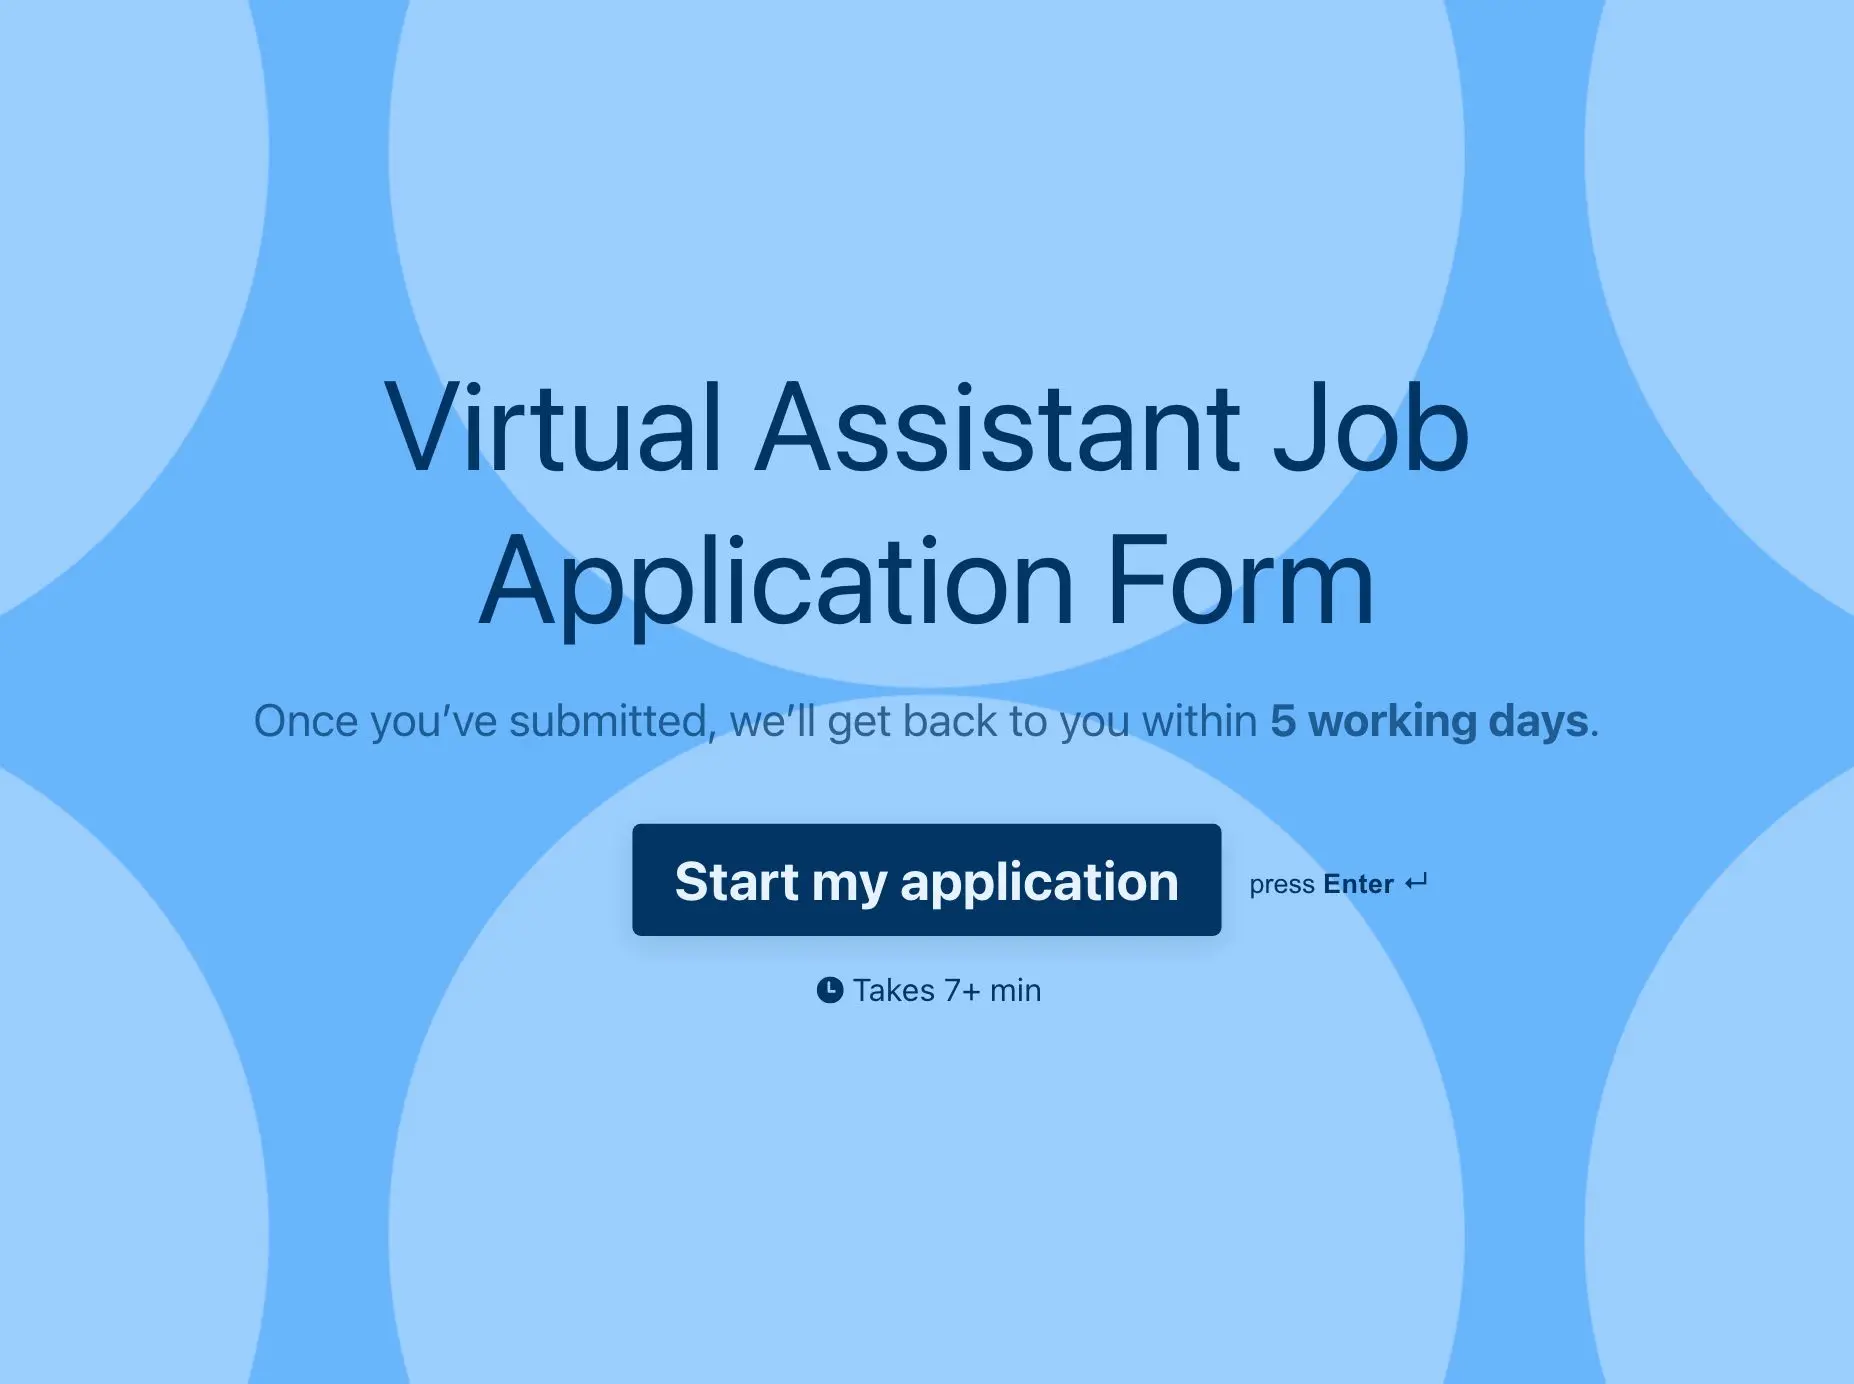 Virtual Assistant Job Application Form Template Hero